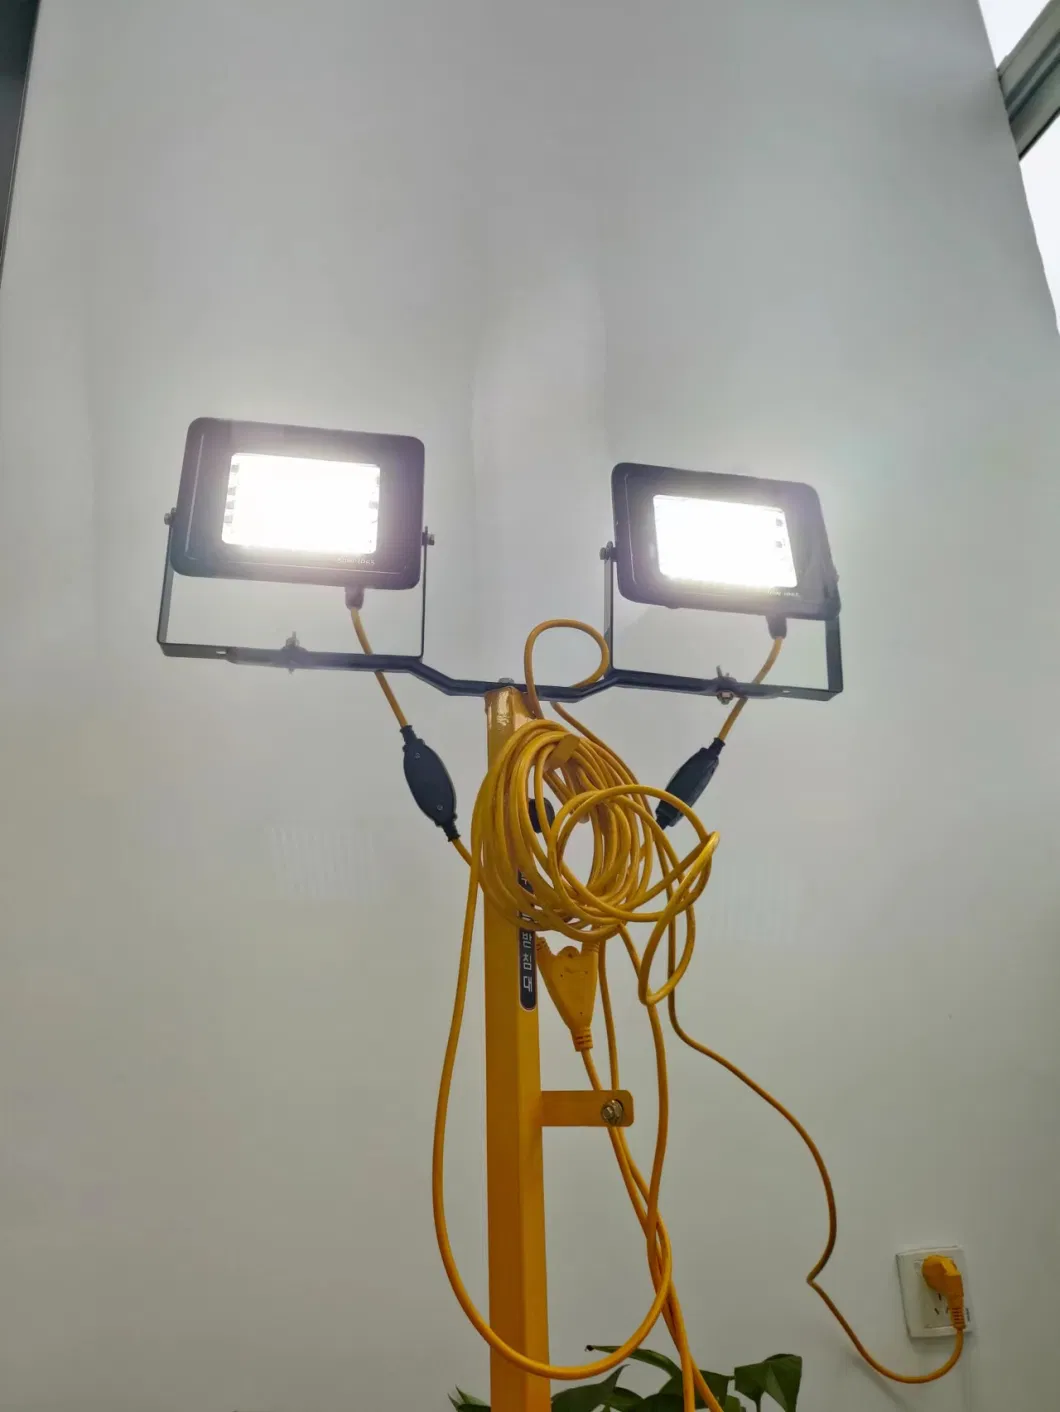 30W Dual Head Portable Tripod Work Light for Mechanic Garage Outdoor Construction